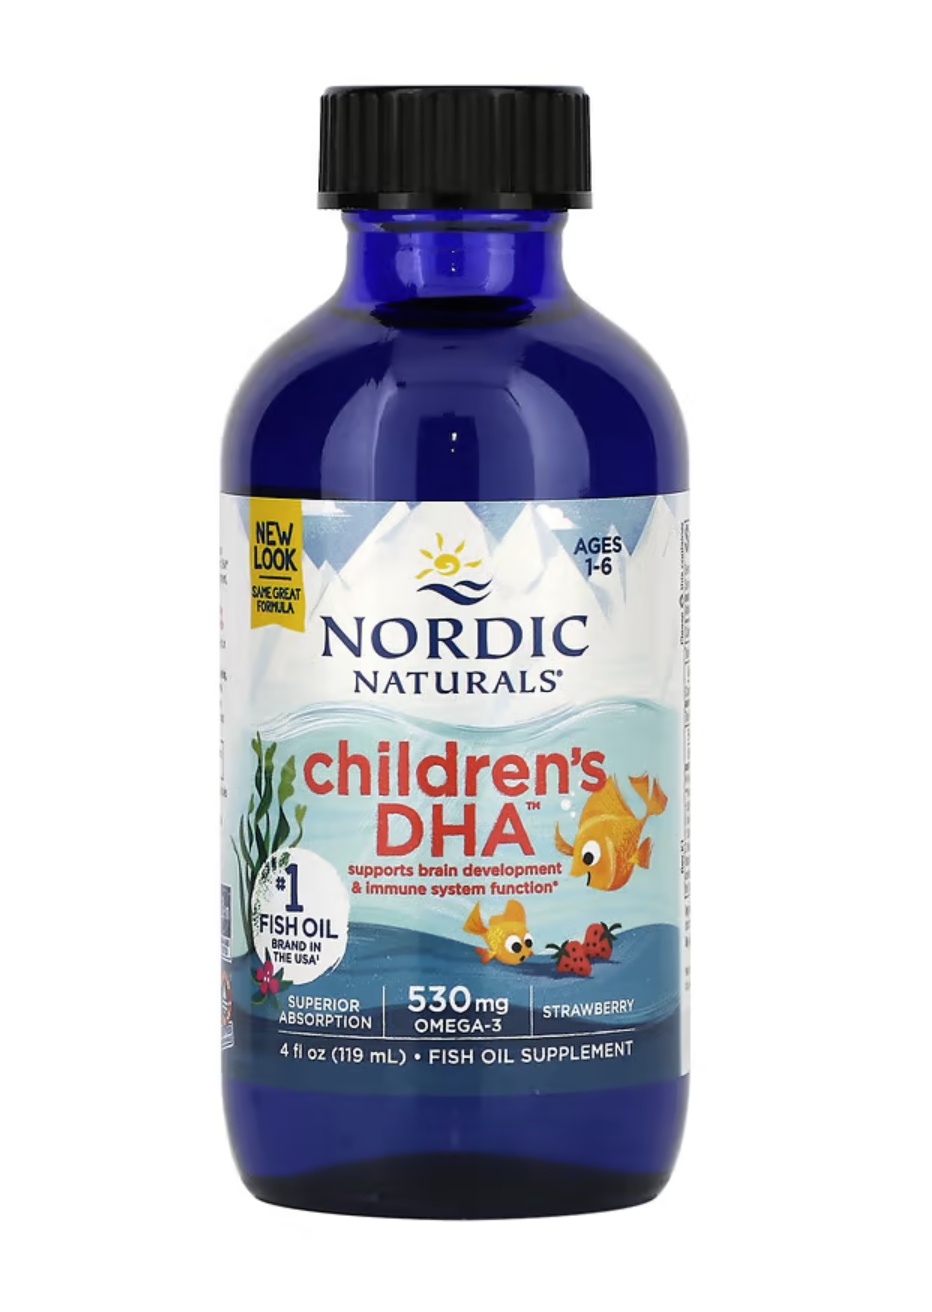 Levně Nordic Naturals Children's DHA, Omega 3 pro děti - jahoda, 530mg, 119 ml